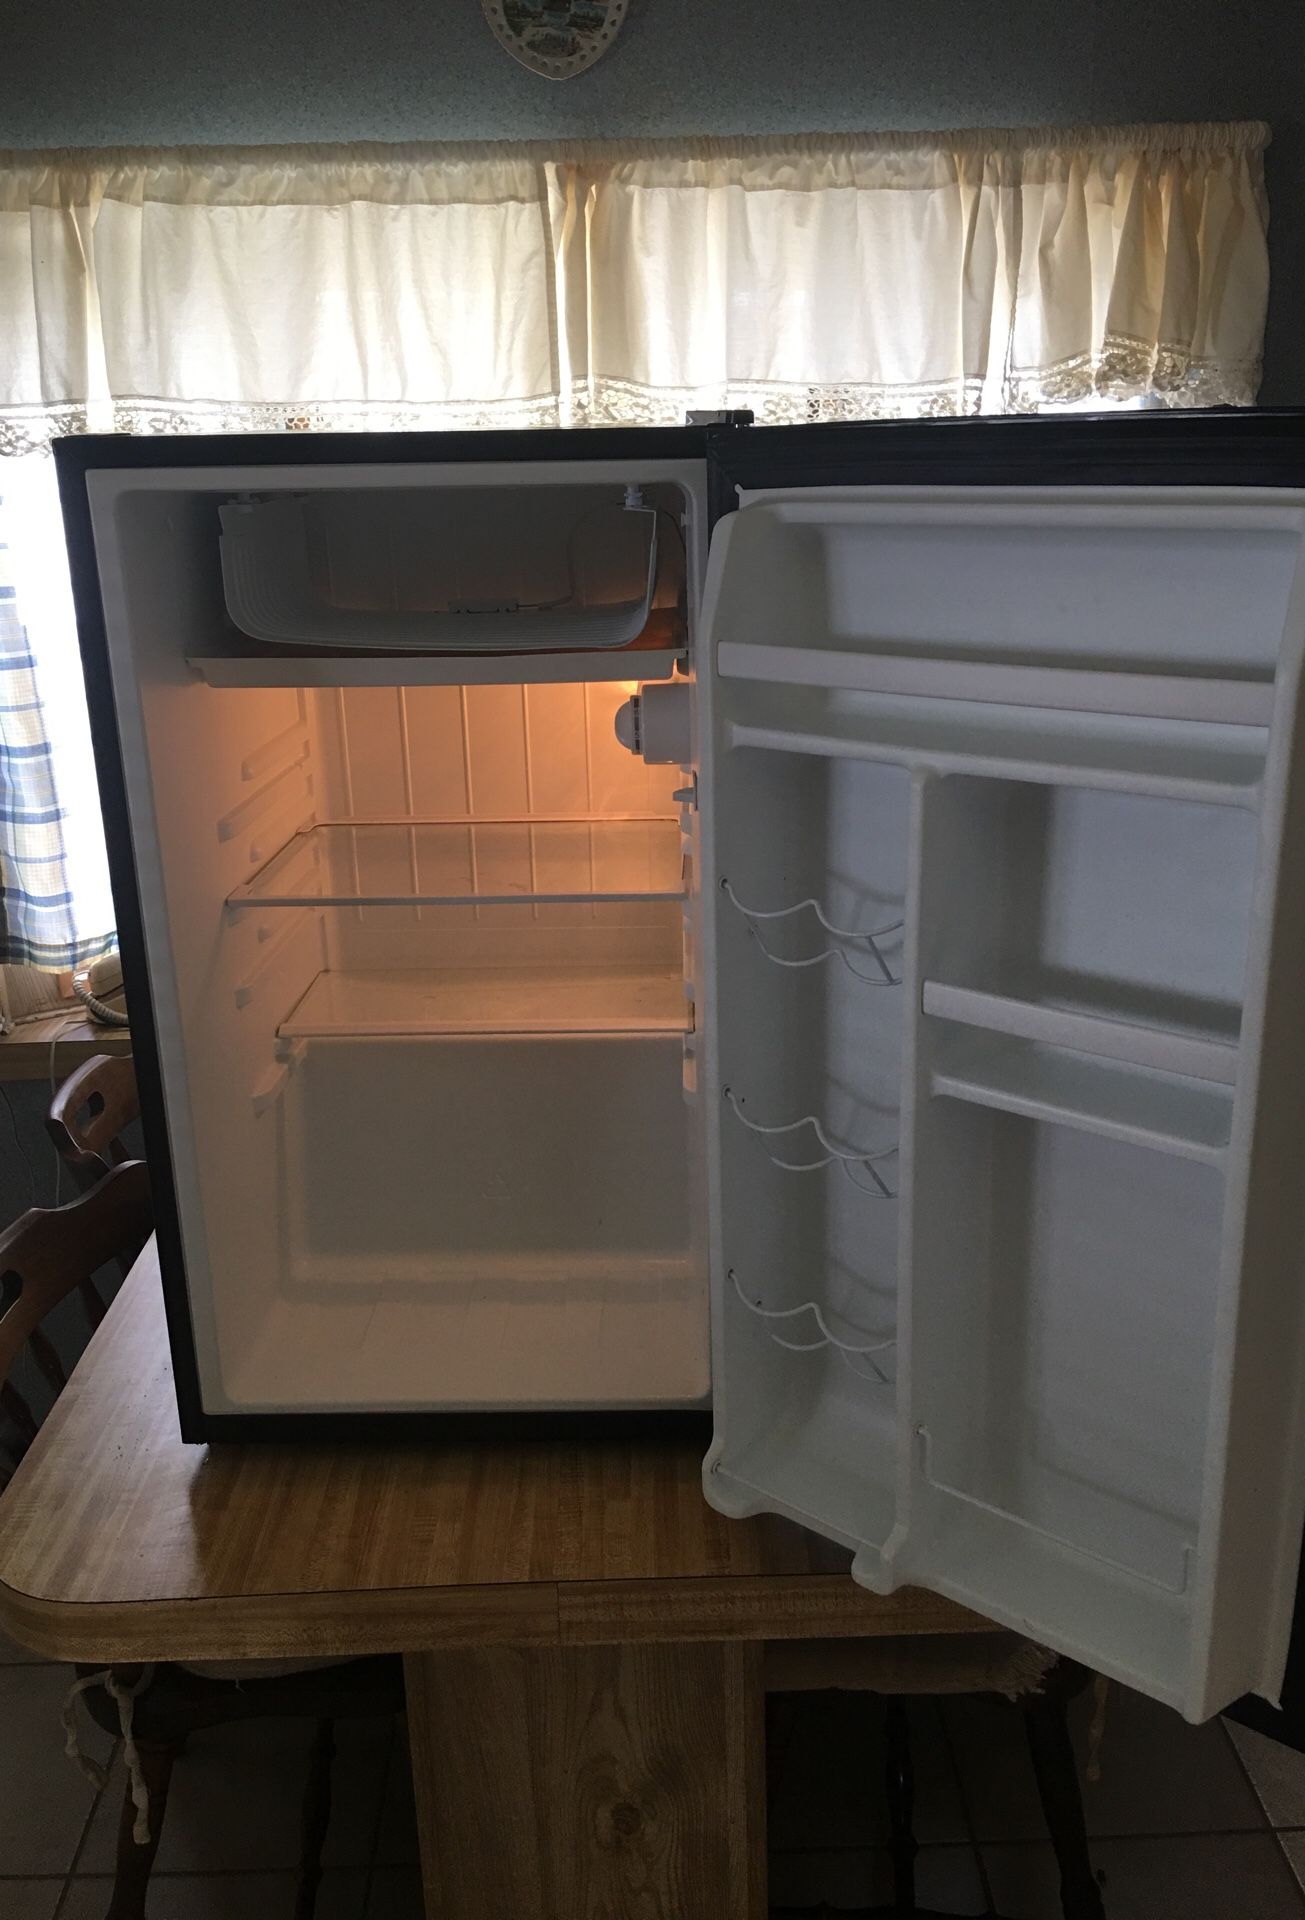 Mini fridge works great!